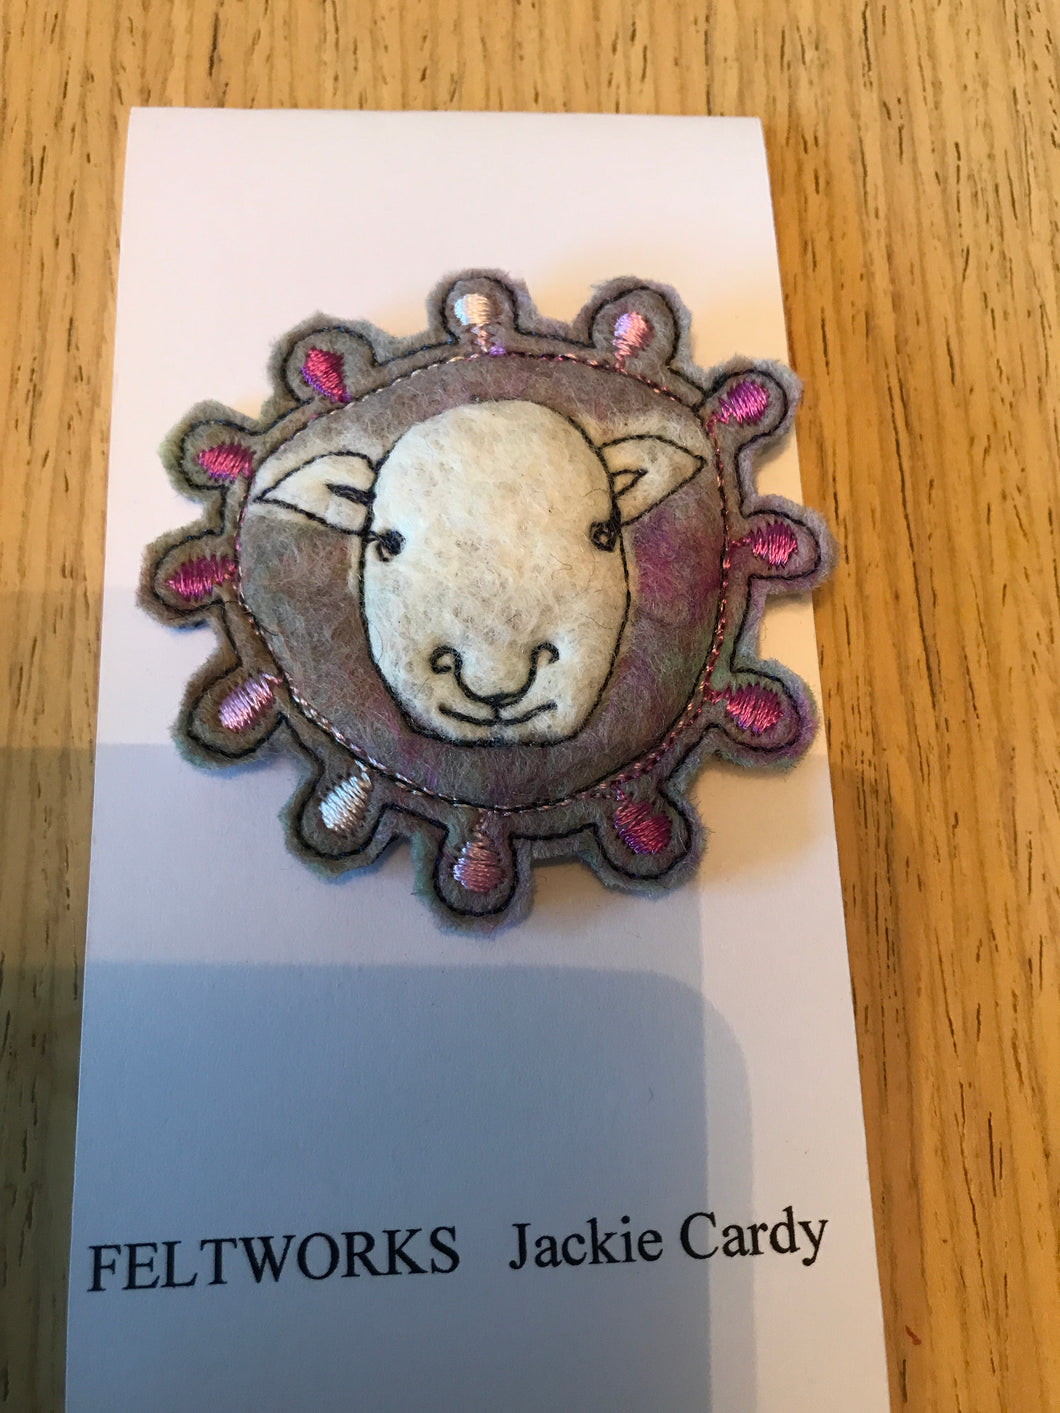 Handmade felt sheep brooch by Feltworks Jackie Cardy No 10